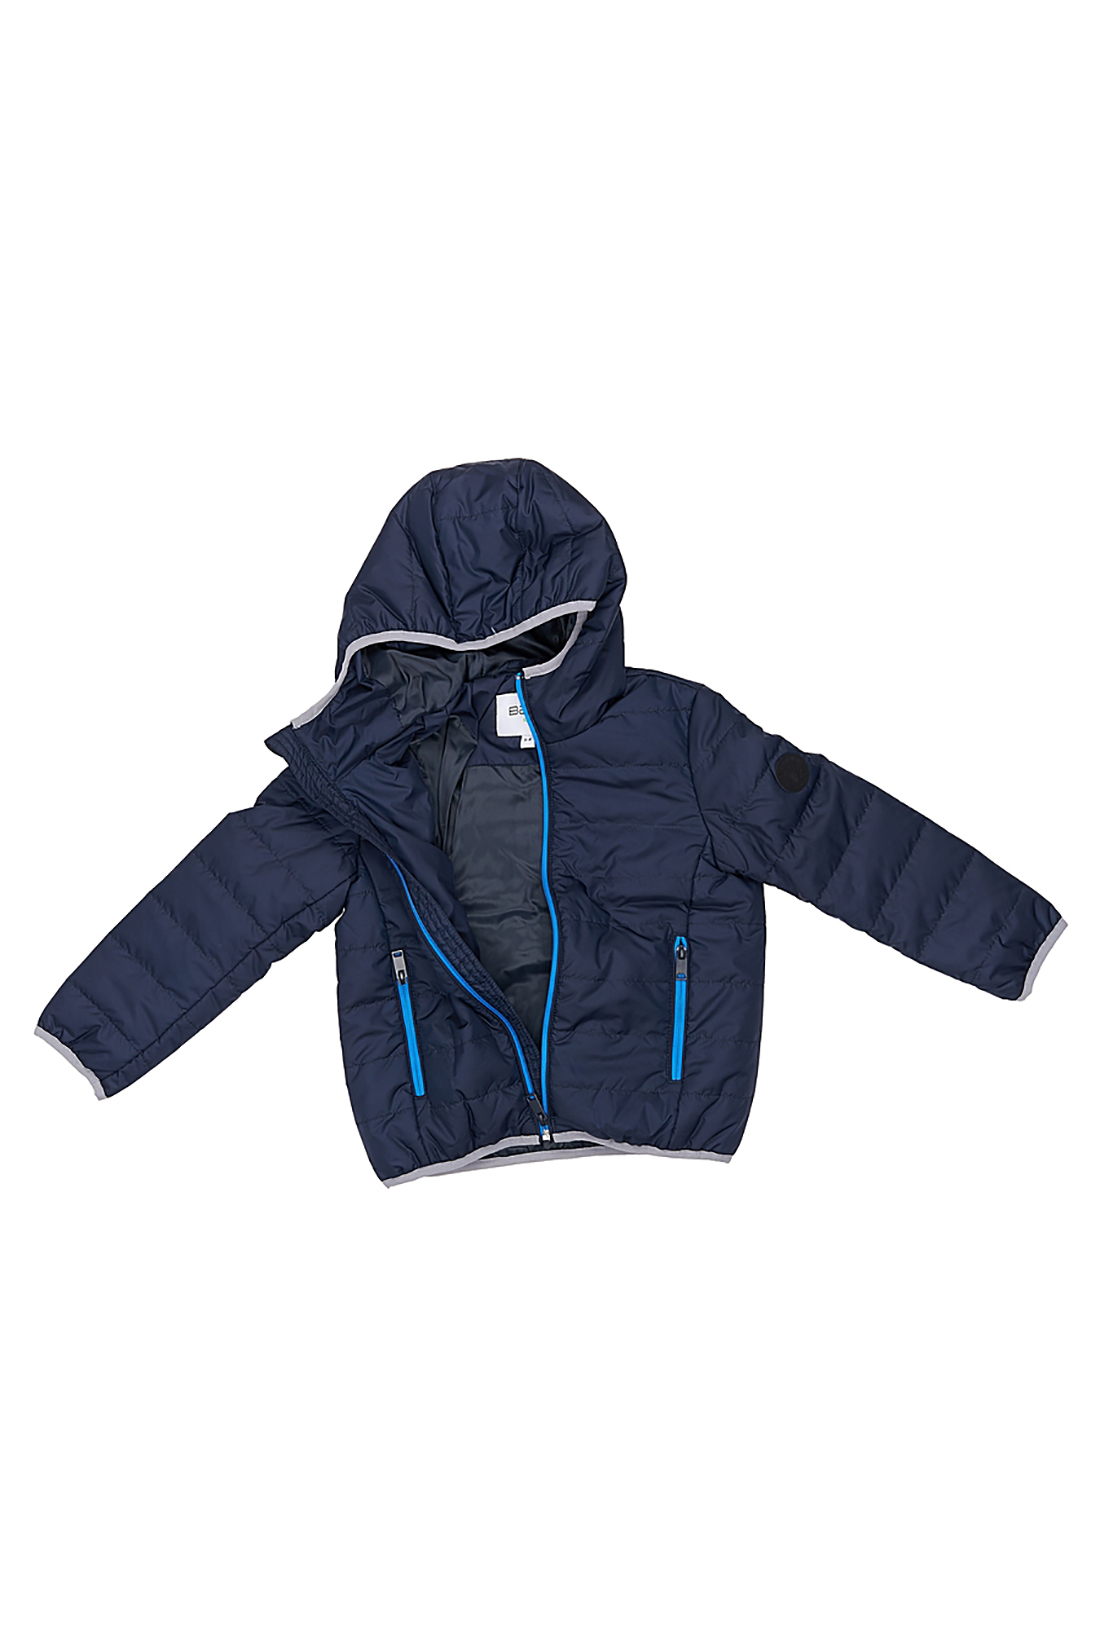 Куртка для мальчика (арт. baon BK538001), размер 110-116, цвет синий Куртка для мальчика (арт. baon BK538001) - фото 3